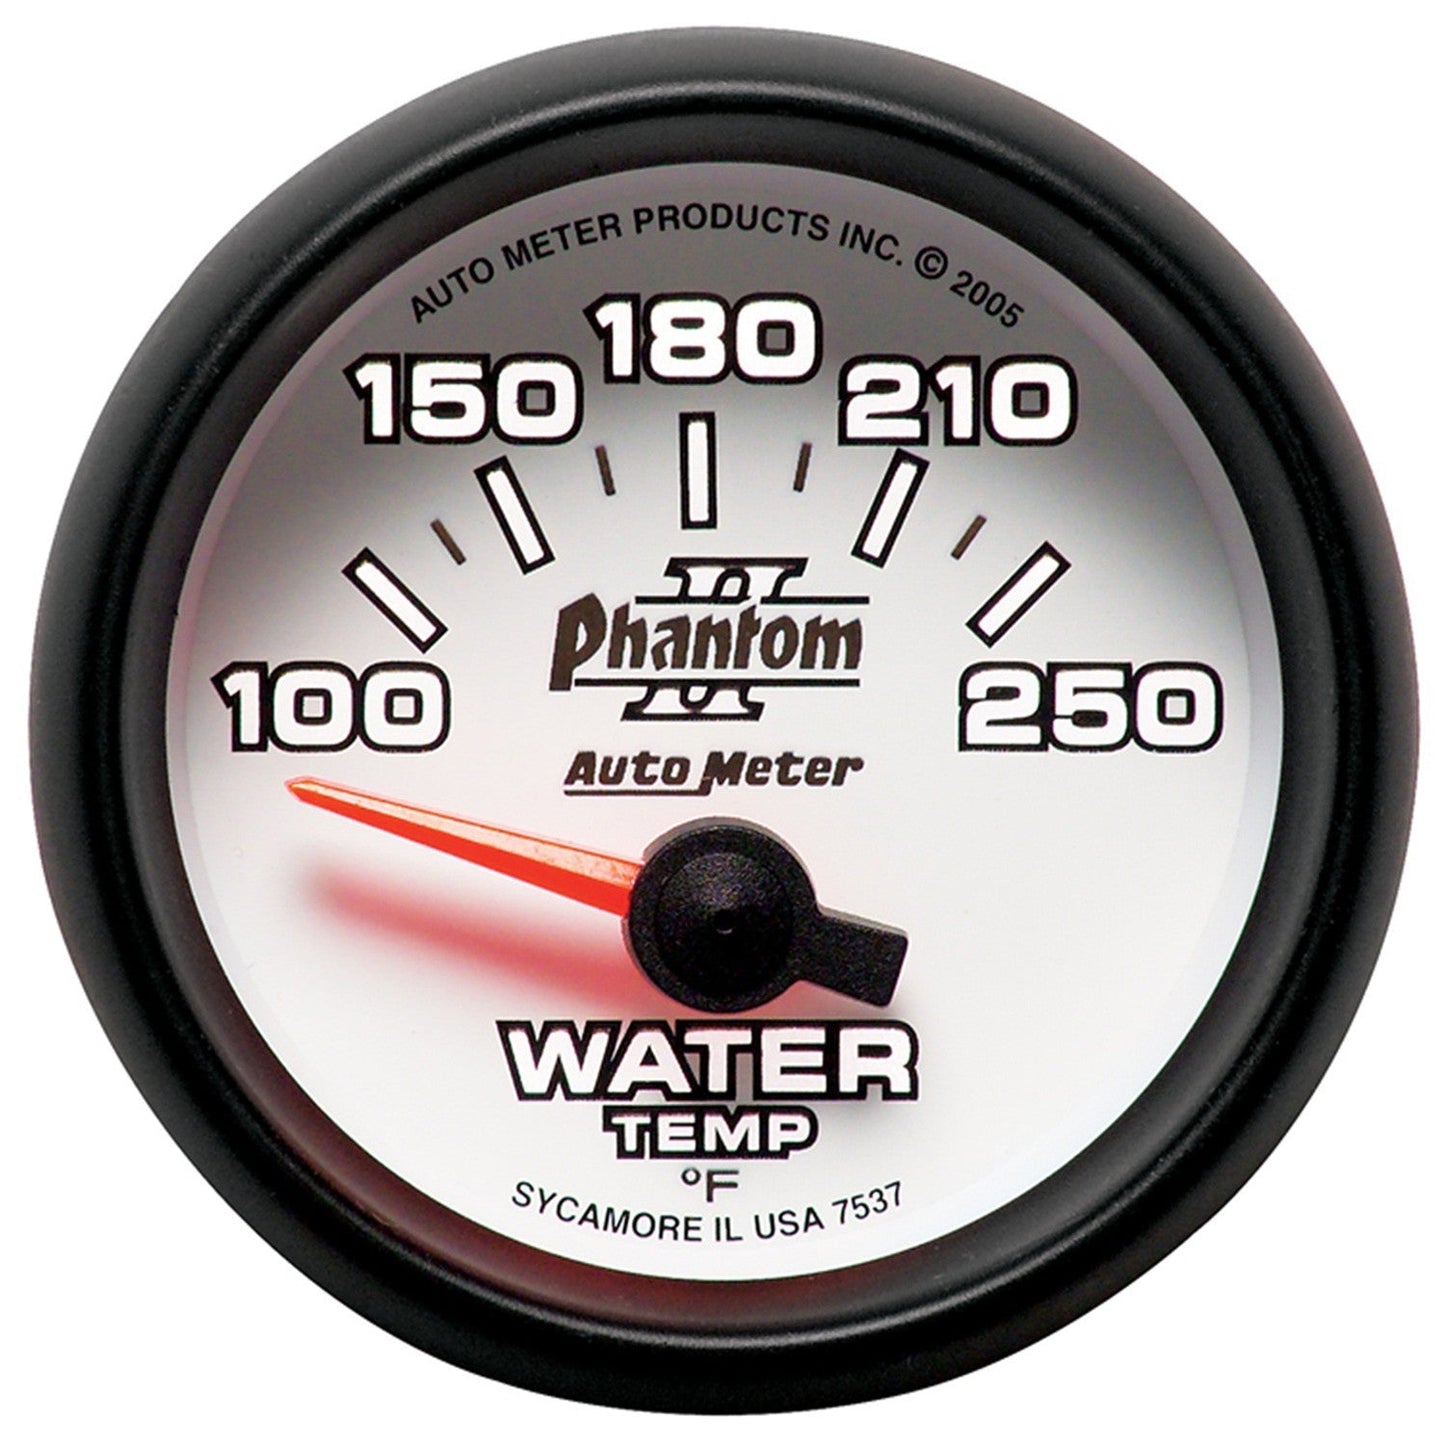 AutoMeter - 2-1/16" WATER TEMPERATURE, 100-250 °F, AIR-CORE, PHANTOM II (7537)